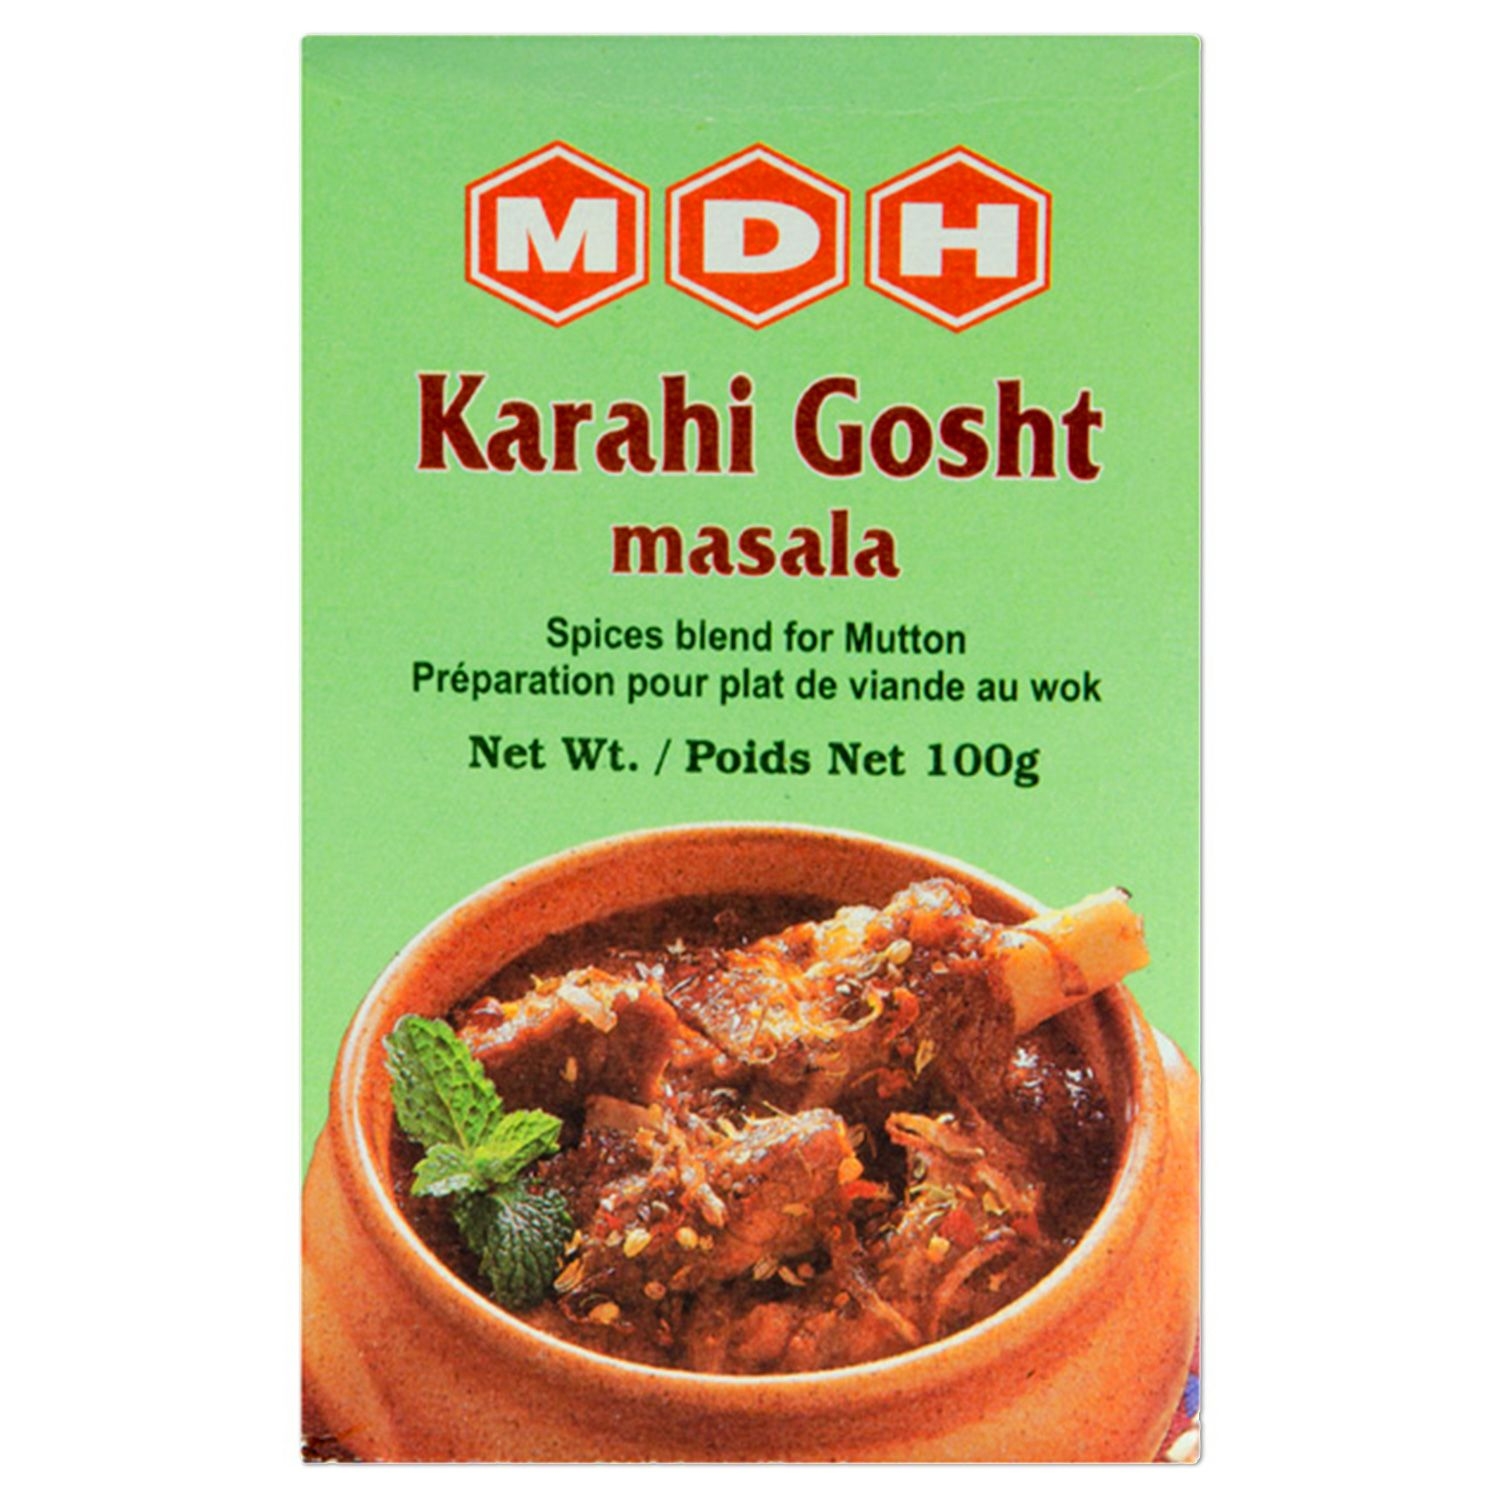 Indian spices blend Karahi gosht masala 100g